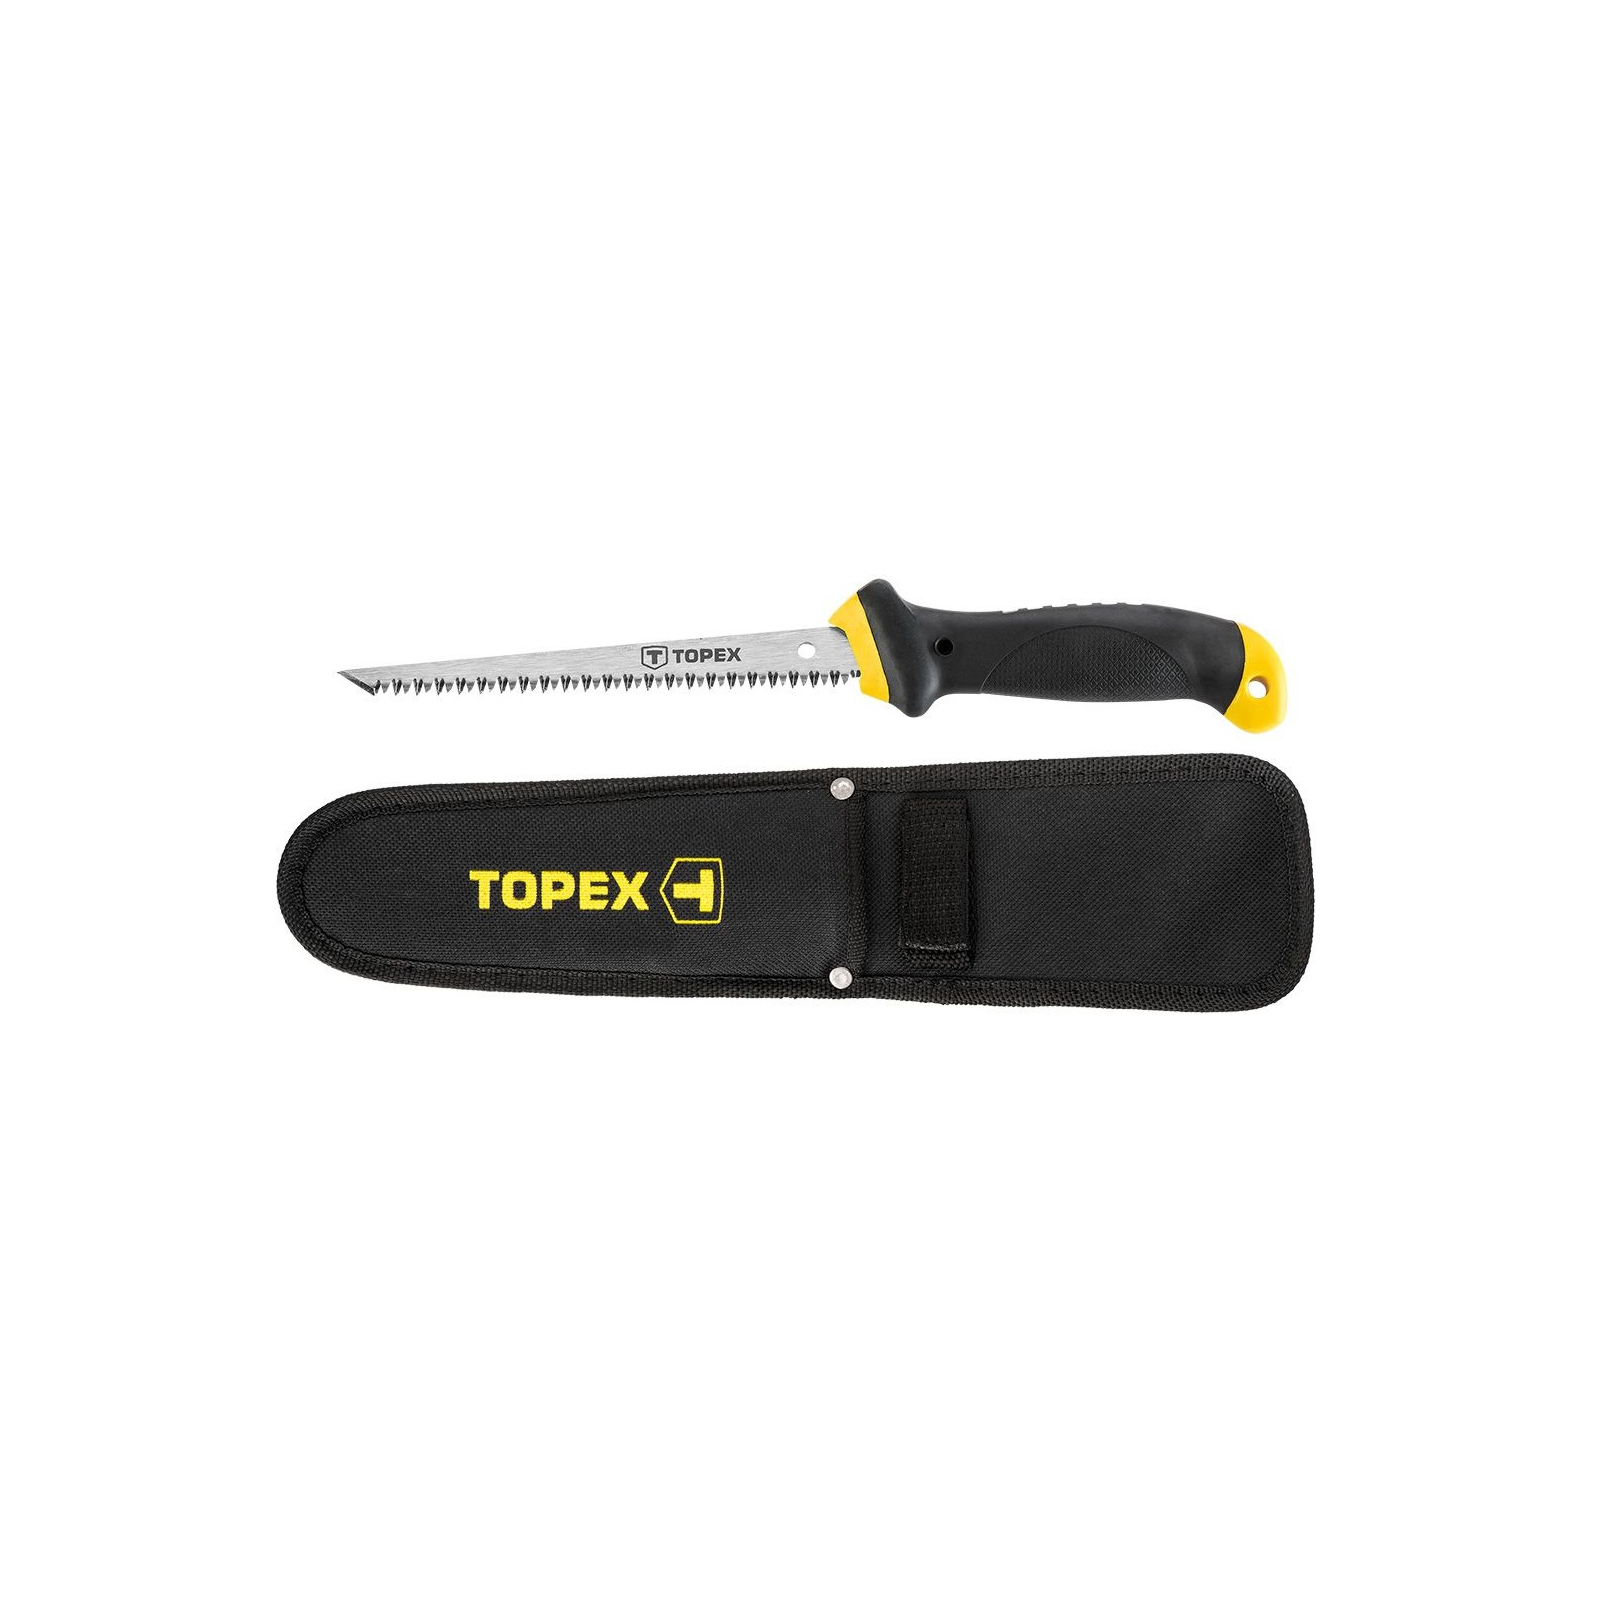 Ножівка Topex по гіпсокартону, тримач пластмаса, 8TPI, лезо 150 мм, 300 мм (10A717P)